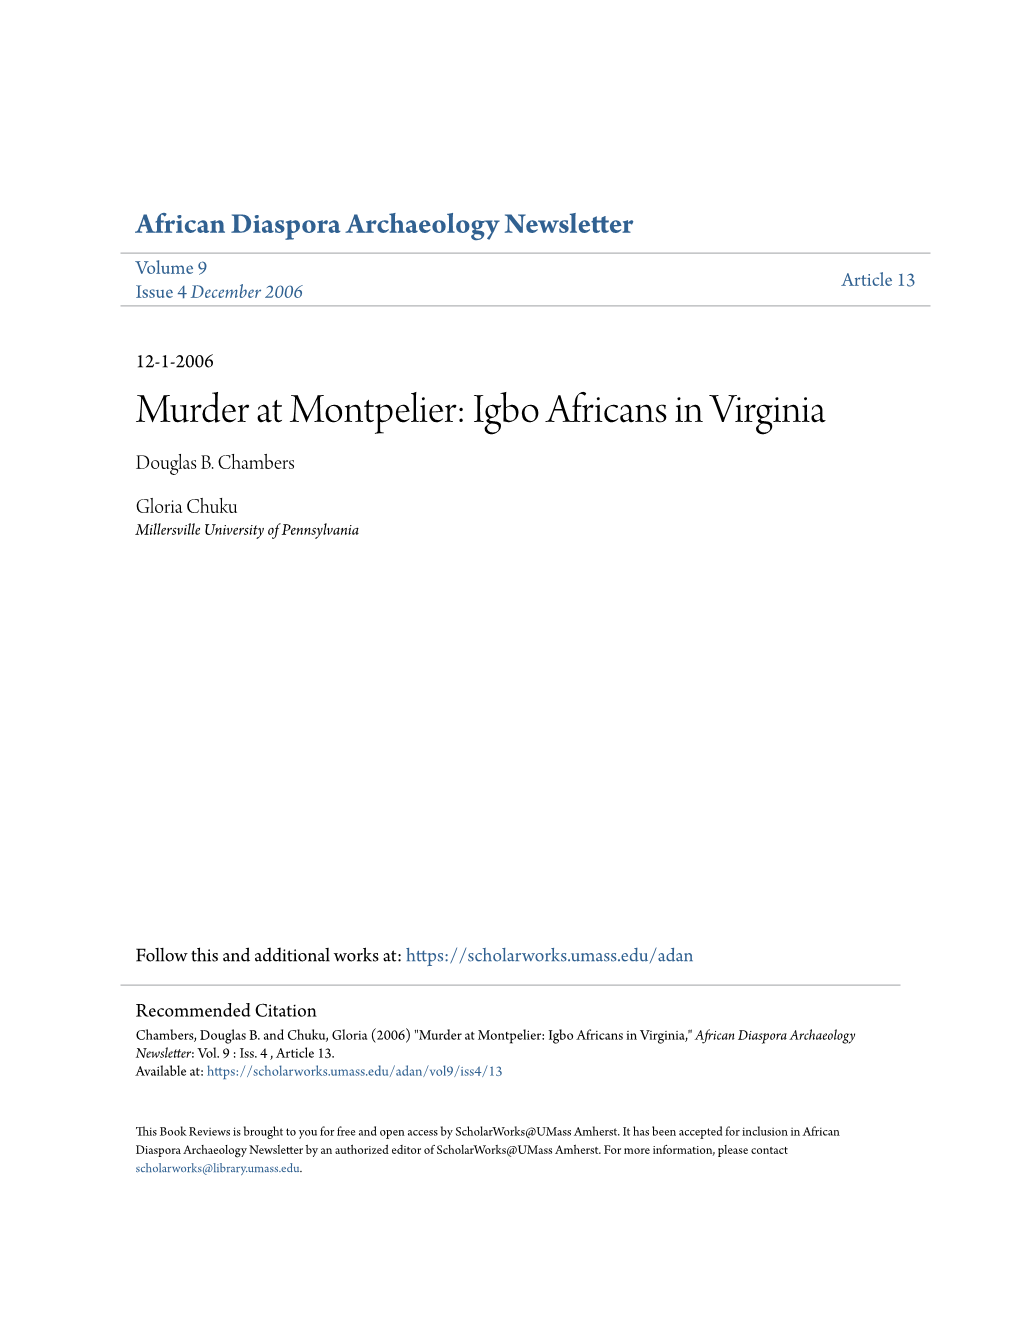 Murder at Montpelier: Igbo Africans in Virginia Douglas B